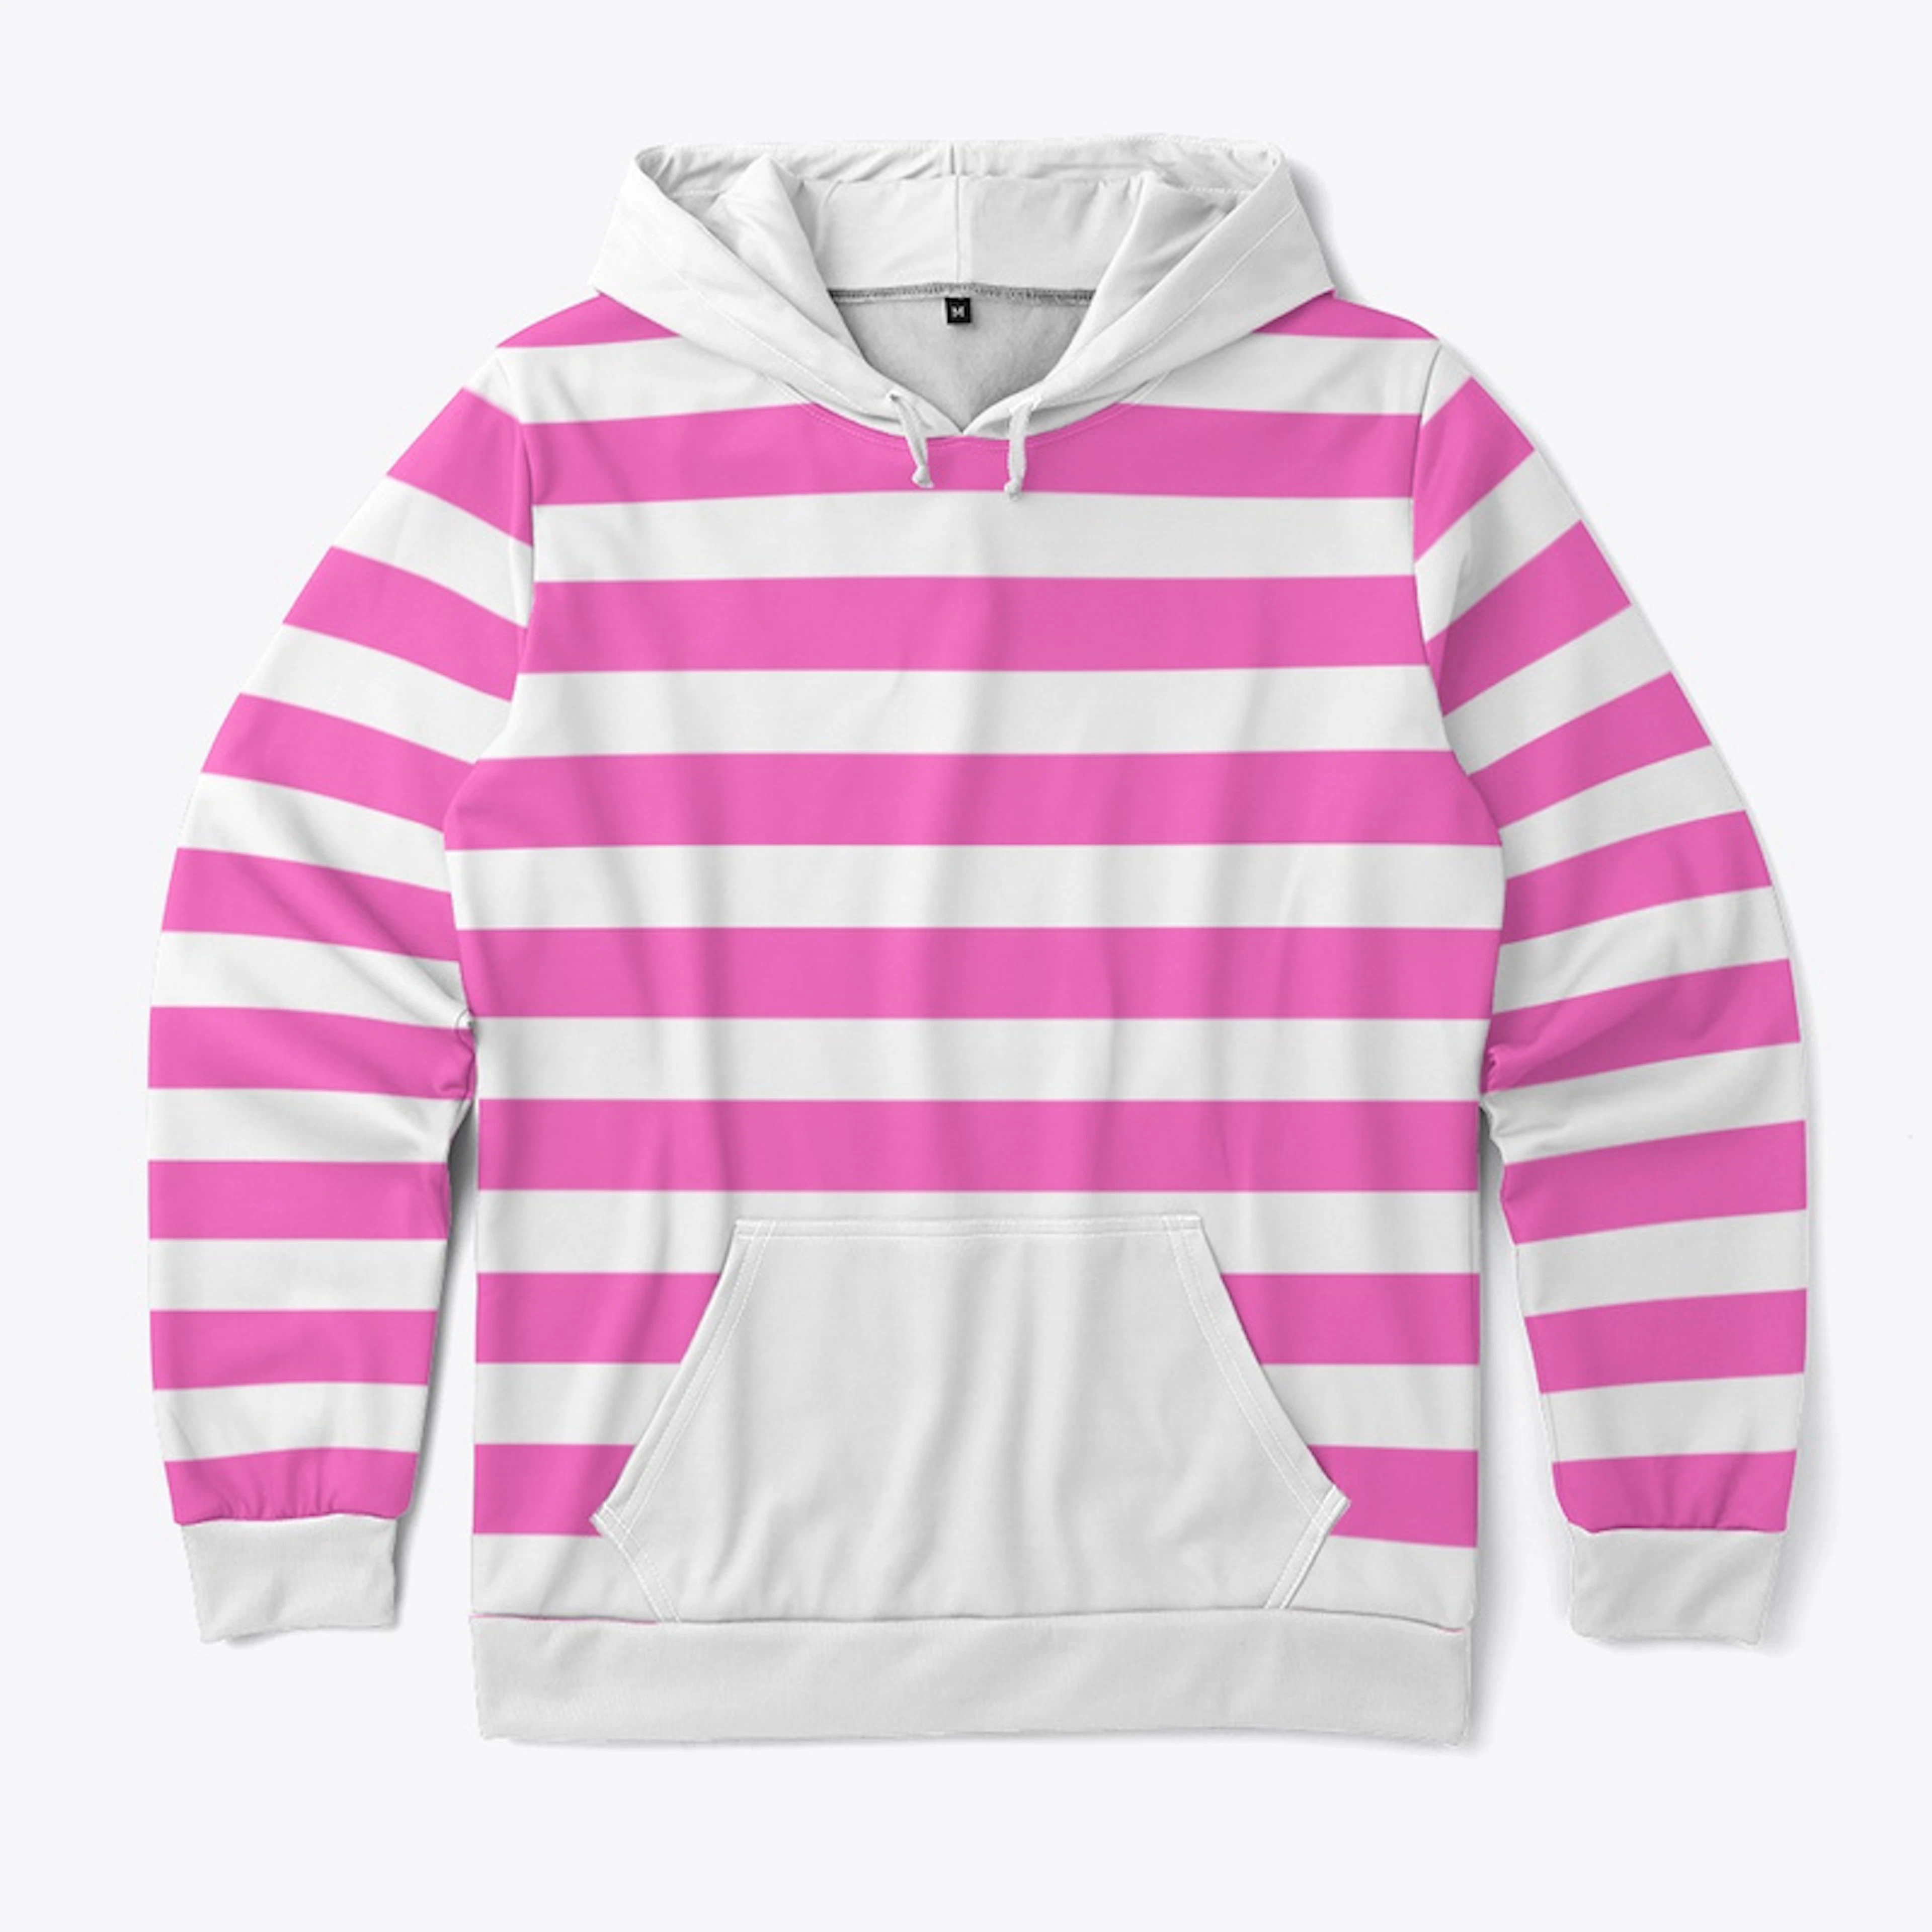 Pink and White Striped Sweatshirt